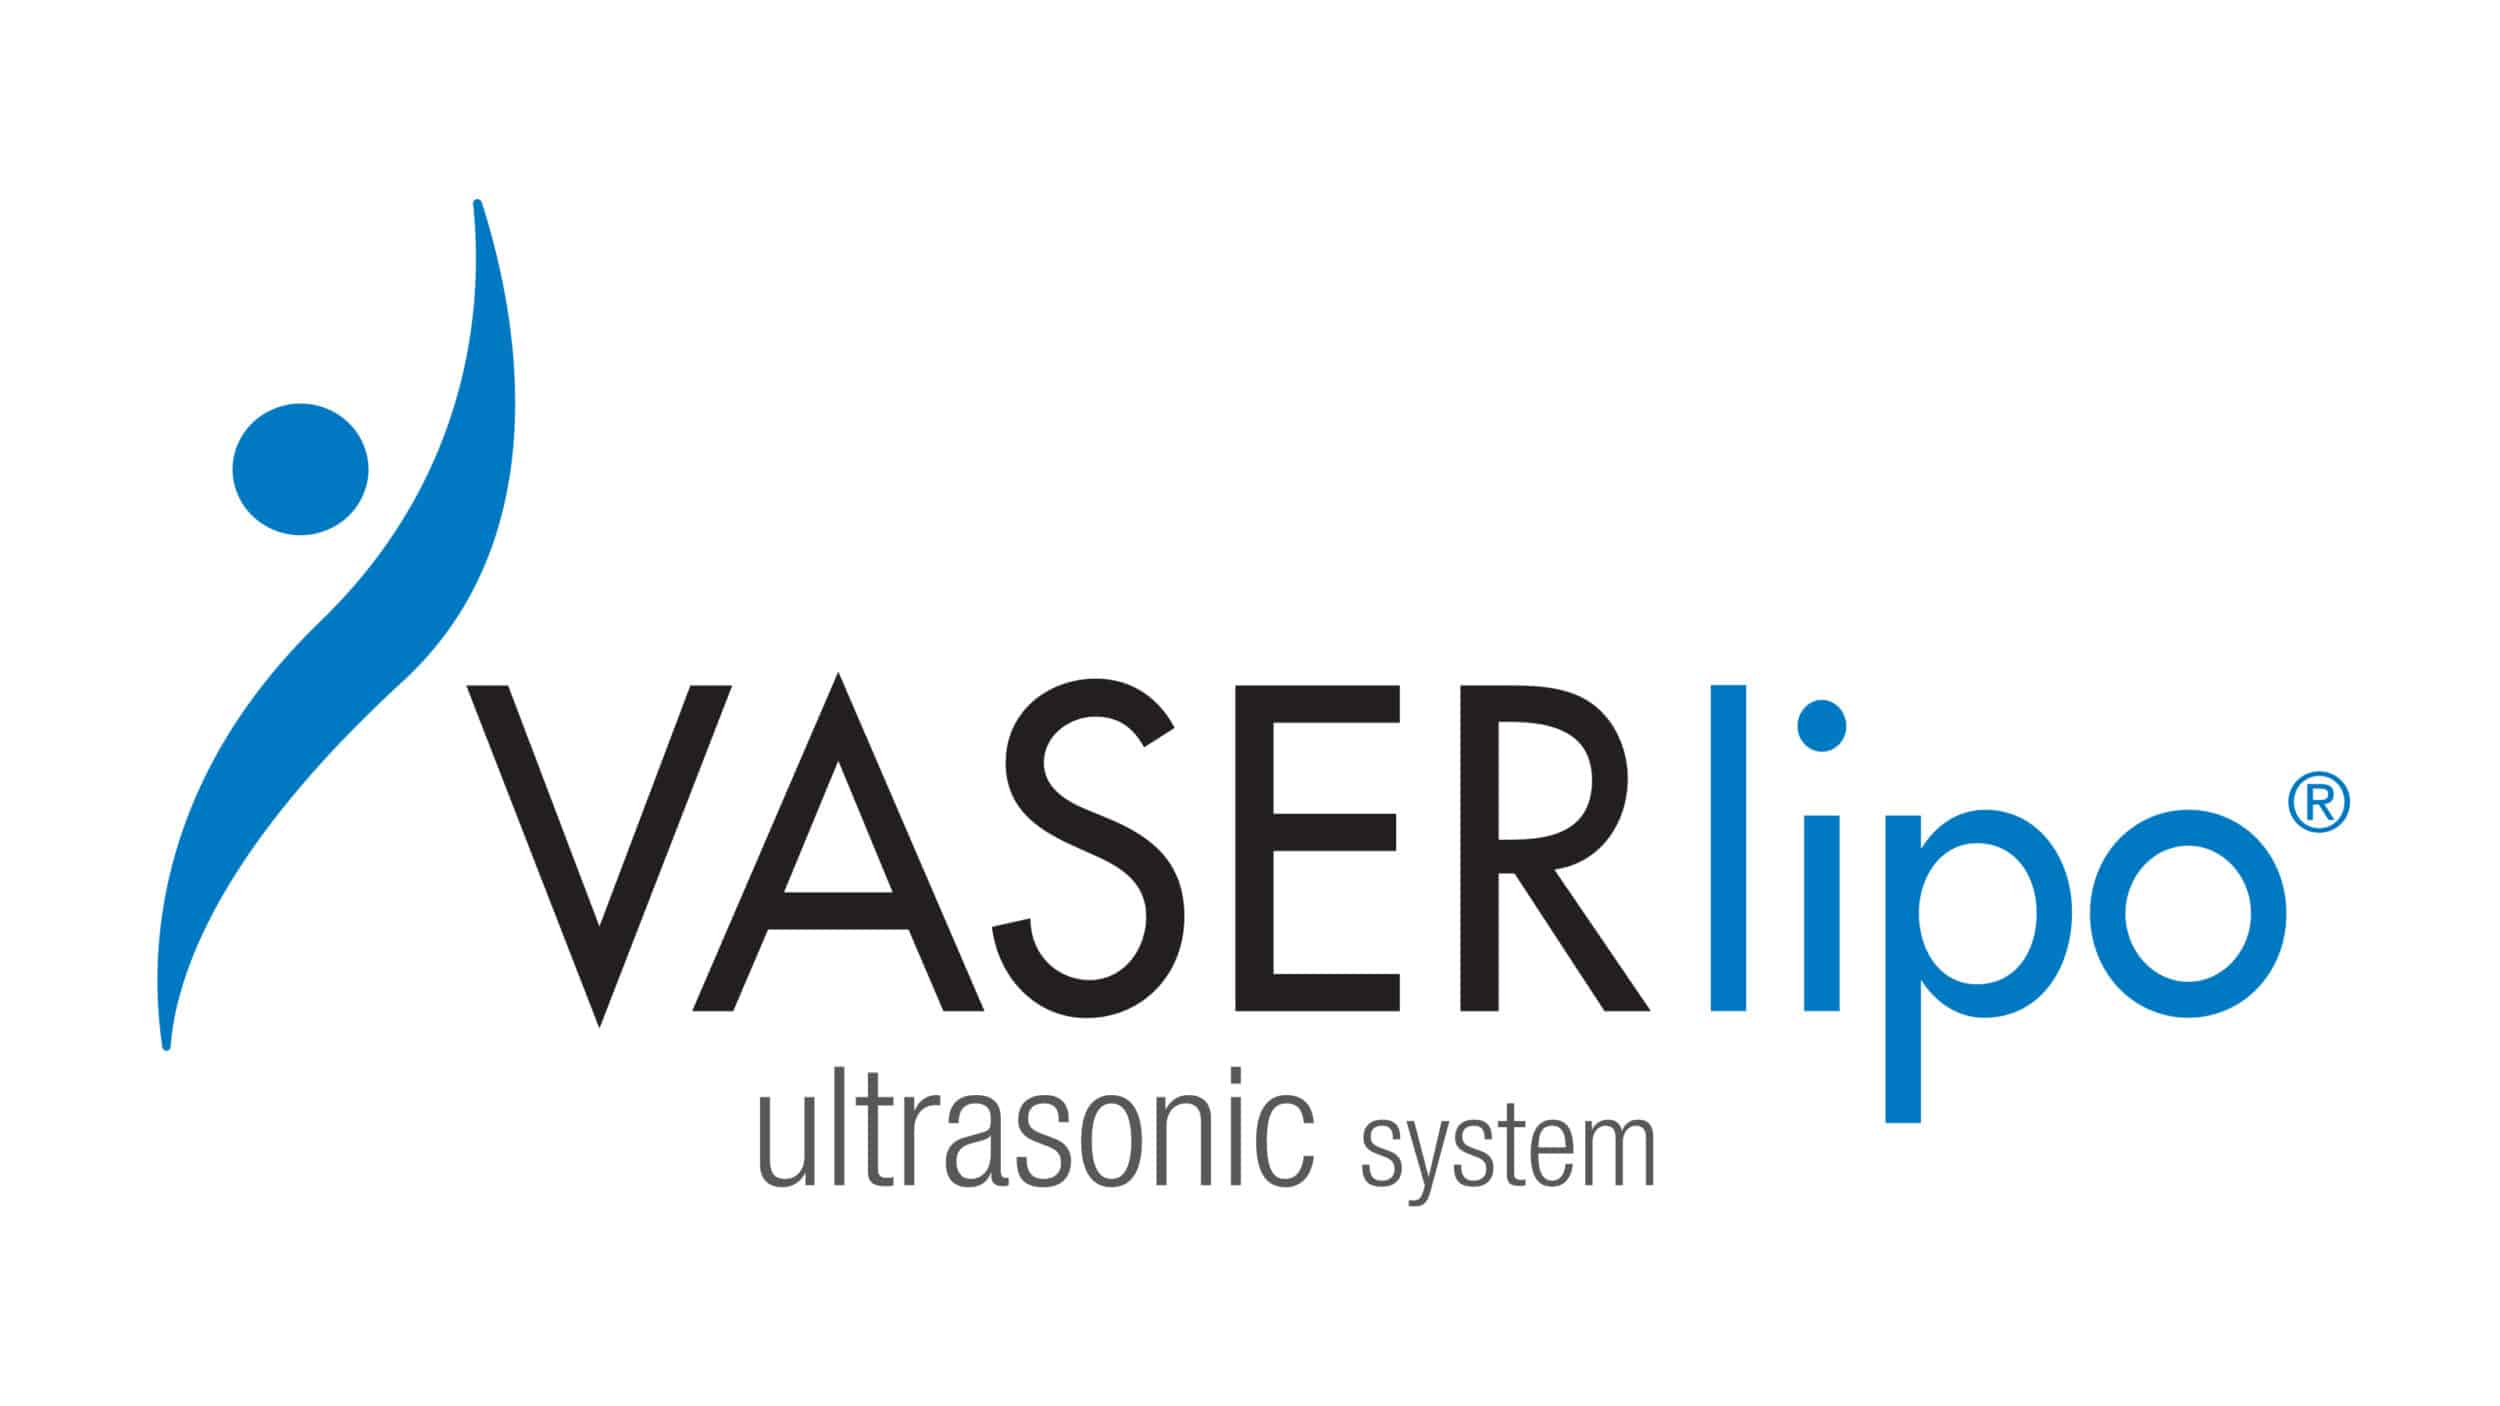 VASERlipo Logo Descriptor